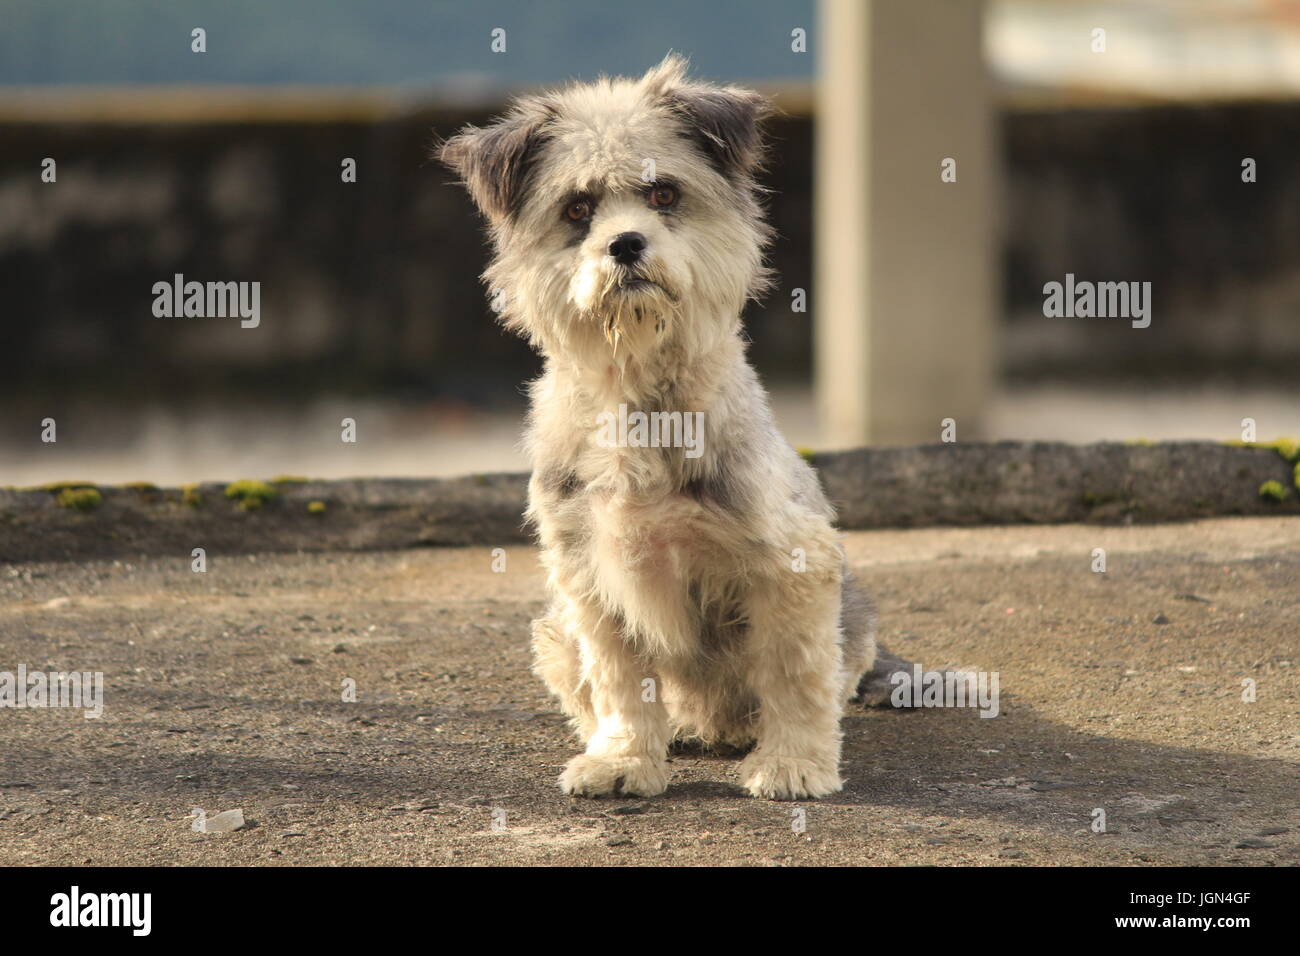 Dog on terrace posing Stock Photo